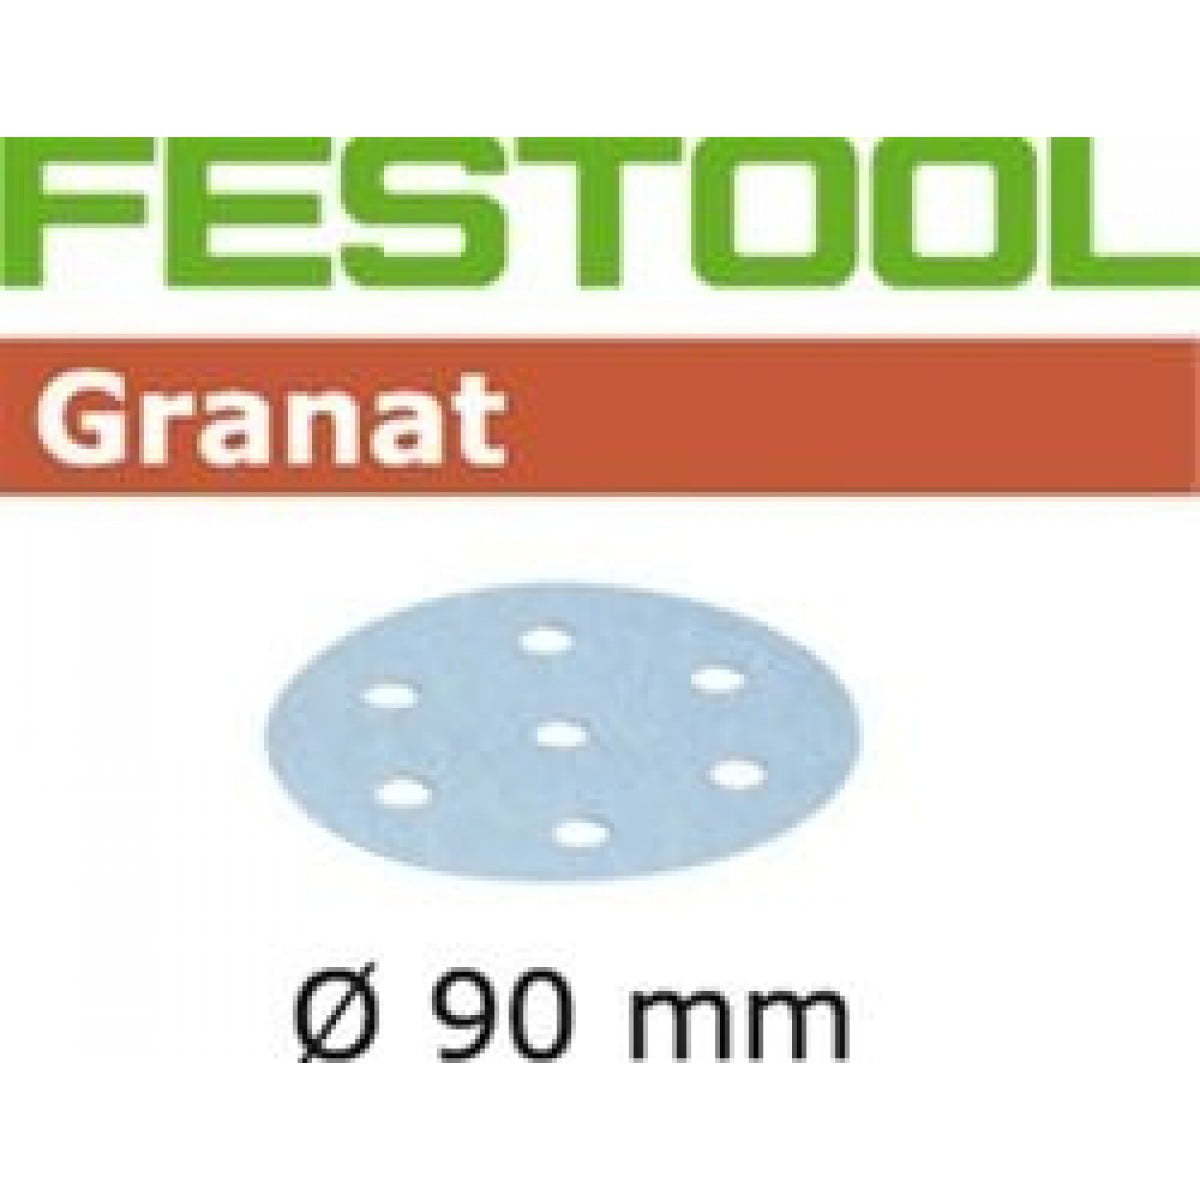 Festool 497364 P60 Grit Granat Abrasives Pack of 50 